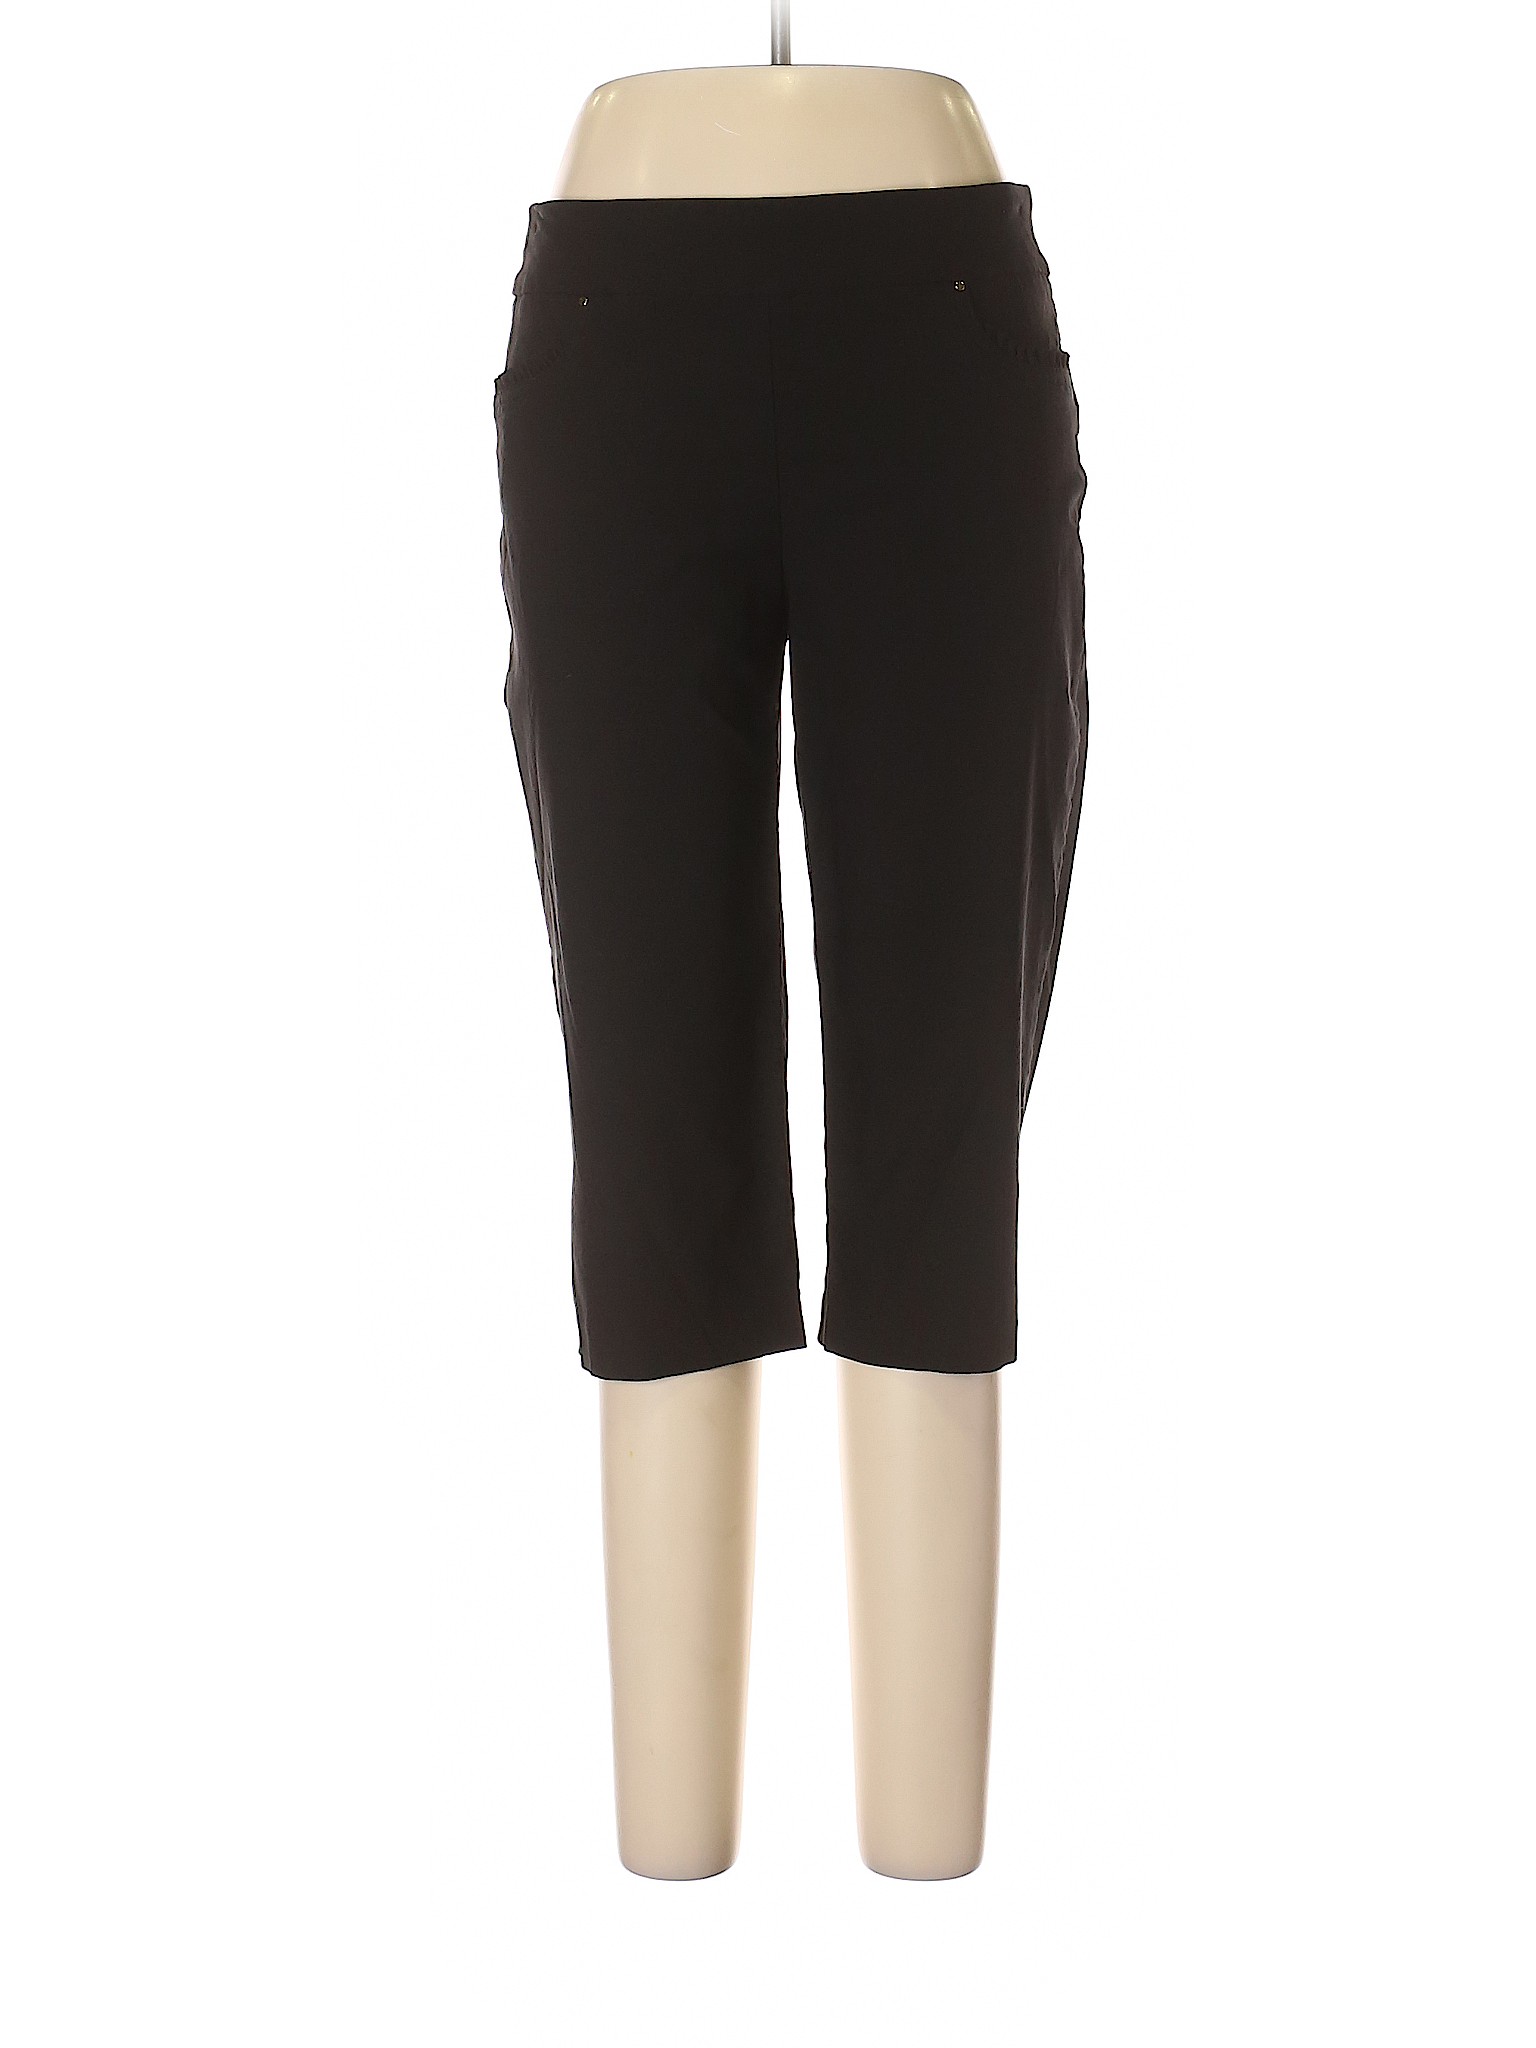 Attyre New York Women Black Casual Pants 12 | eBay